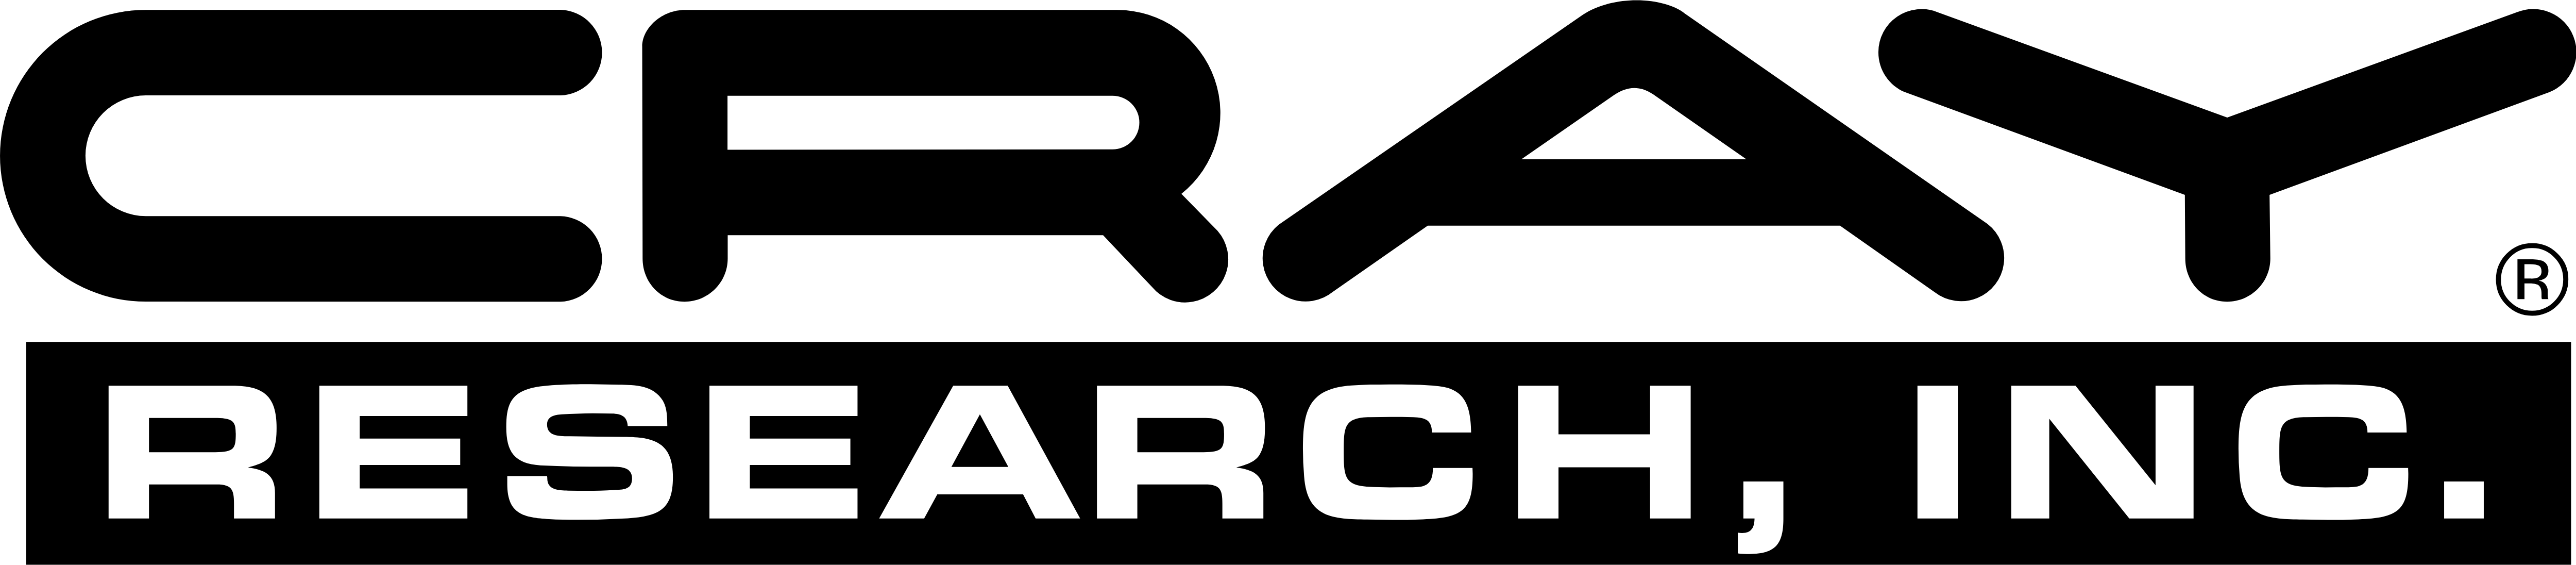 Cray Logo - Cray Research inc – Logos Download